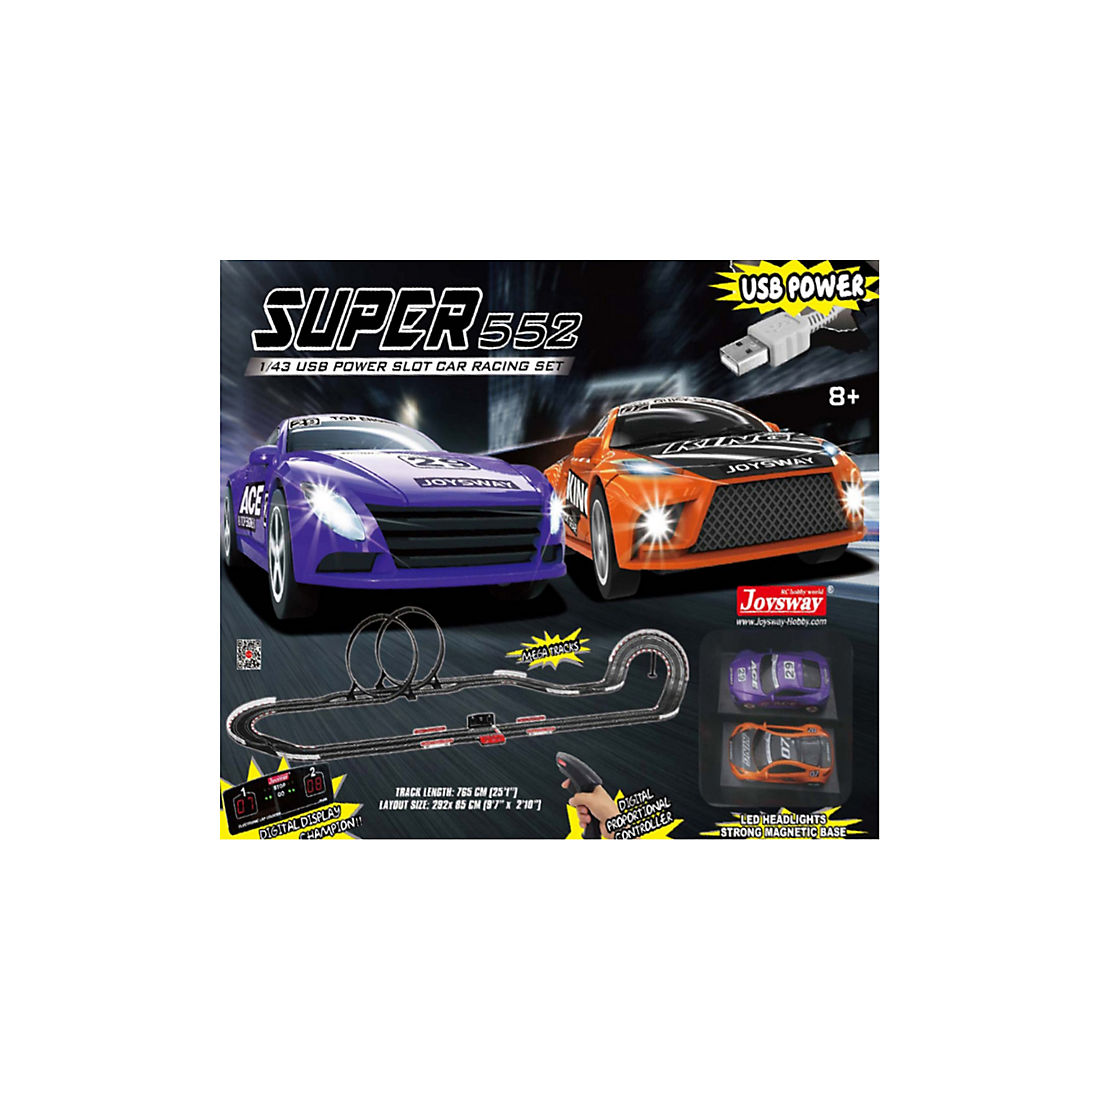 Superior 552 USB Power Slot Car Racing Set 